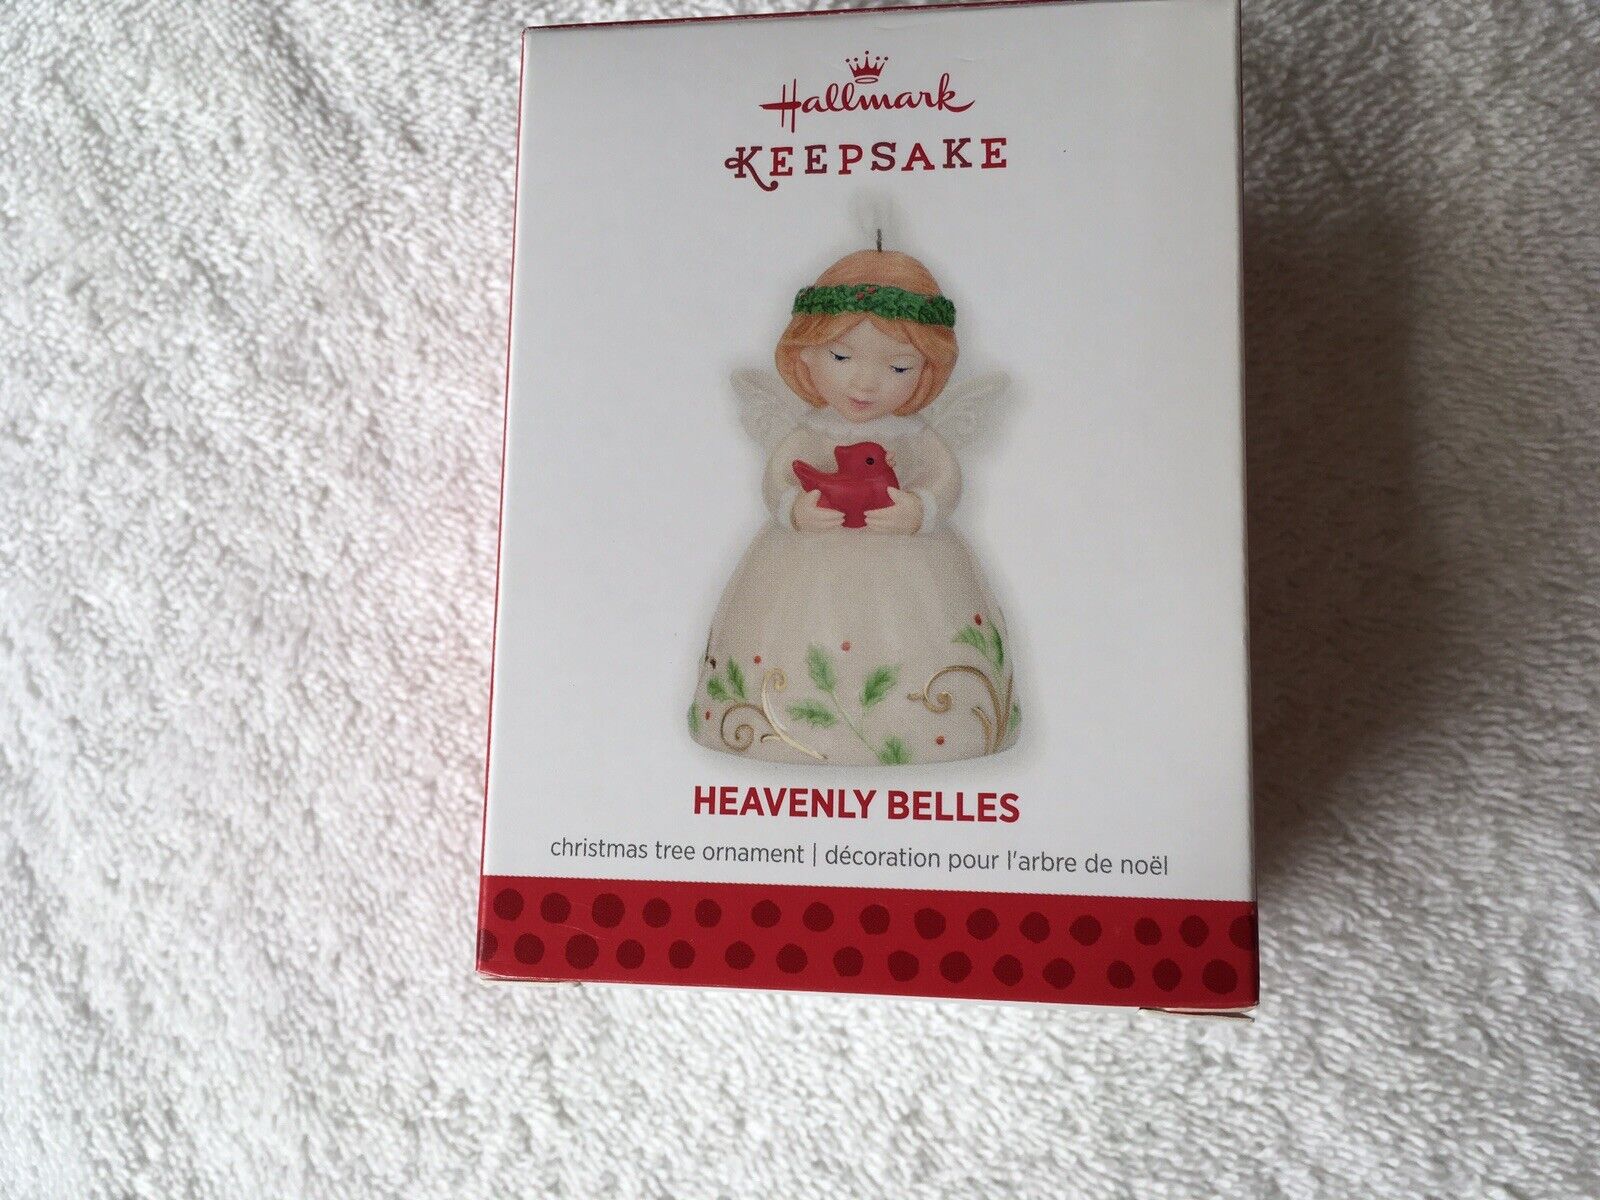 2013 HALLMARK -HEAVENLY BELLES - 1ST IN THE HEAVENLY BELLES SERIES - MINT IN BOX